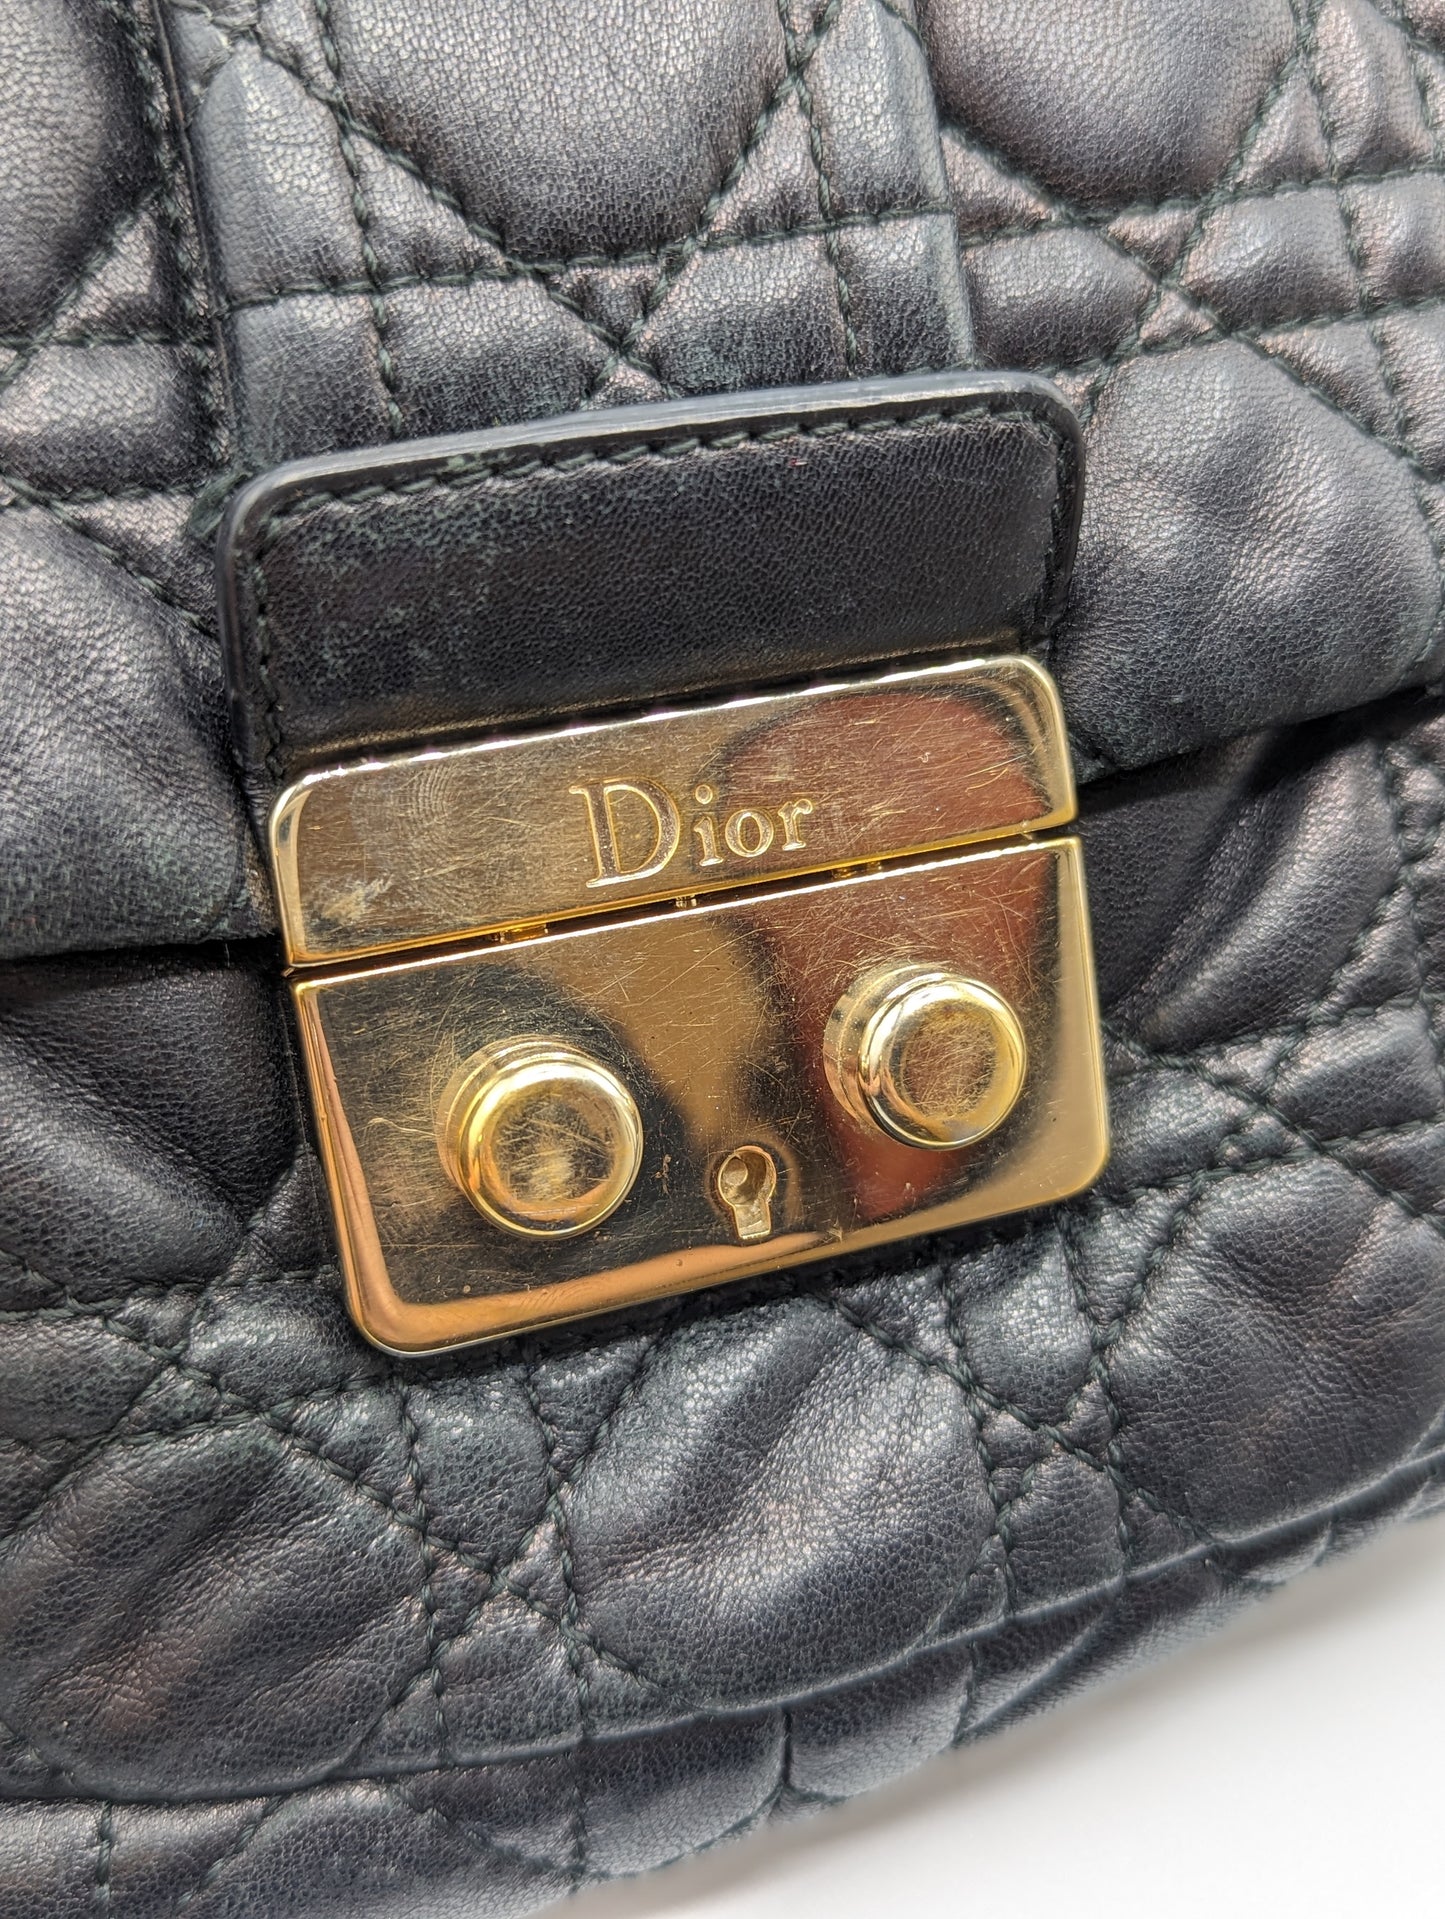 Christian Dior New Lock Black Lambskin Cannage Flap Bag